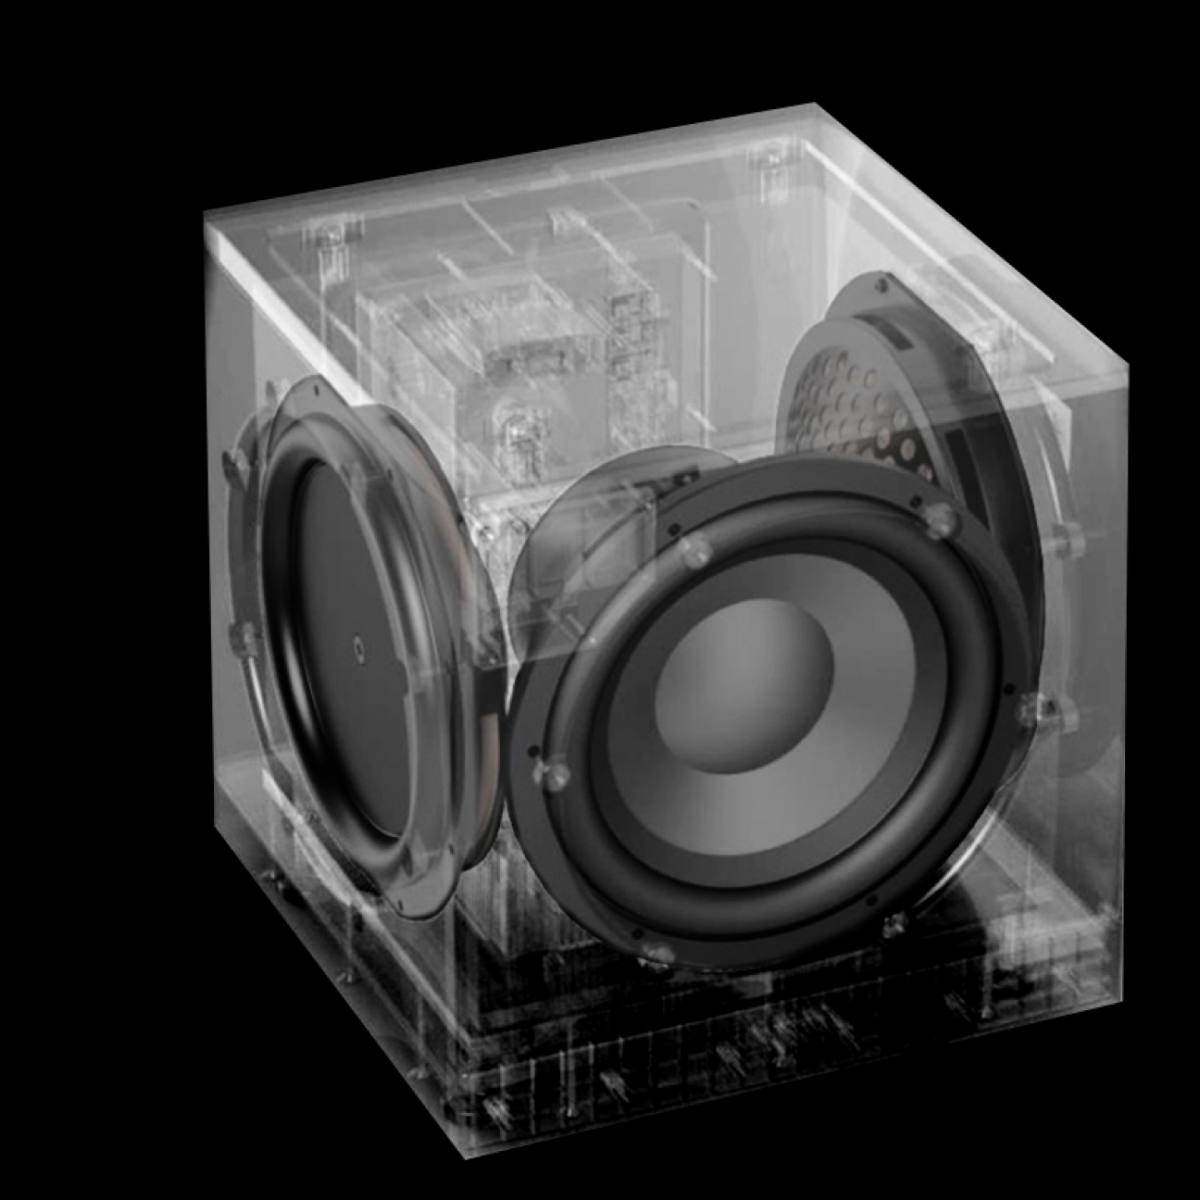 Loa Subwoofer Hi-end Definitive Technology DN10 | Anh Duy Audio